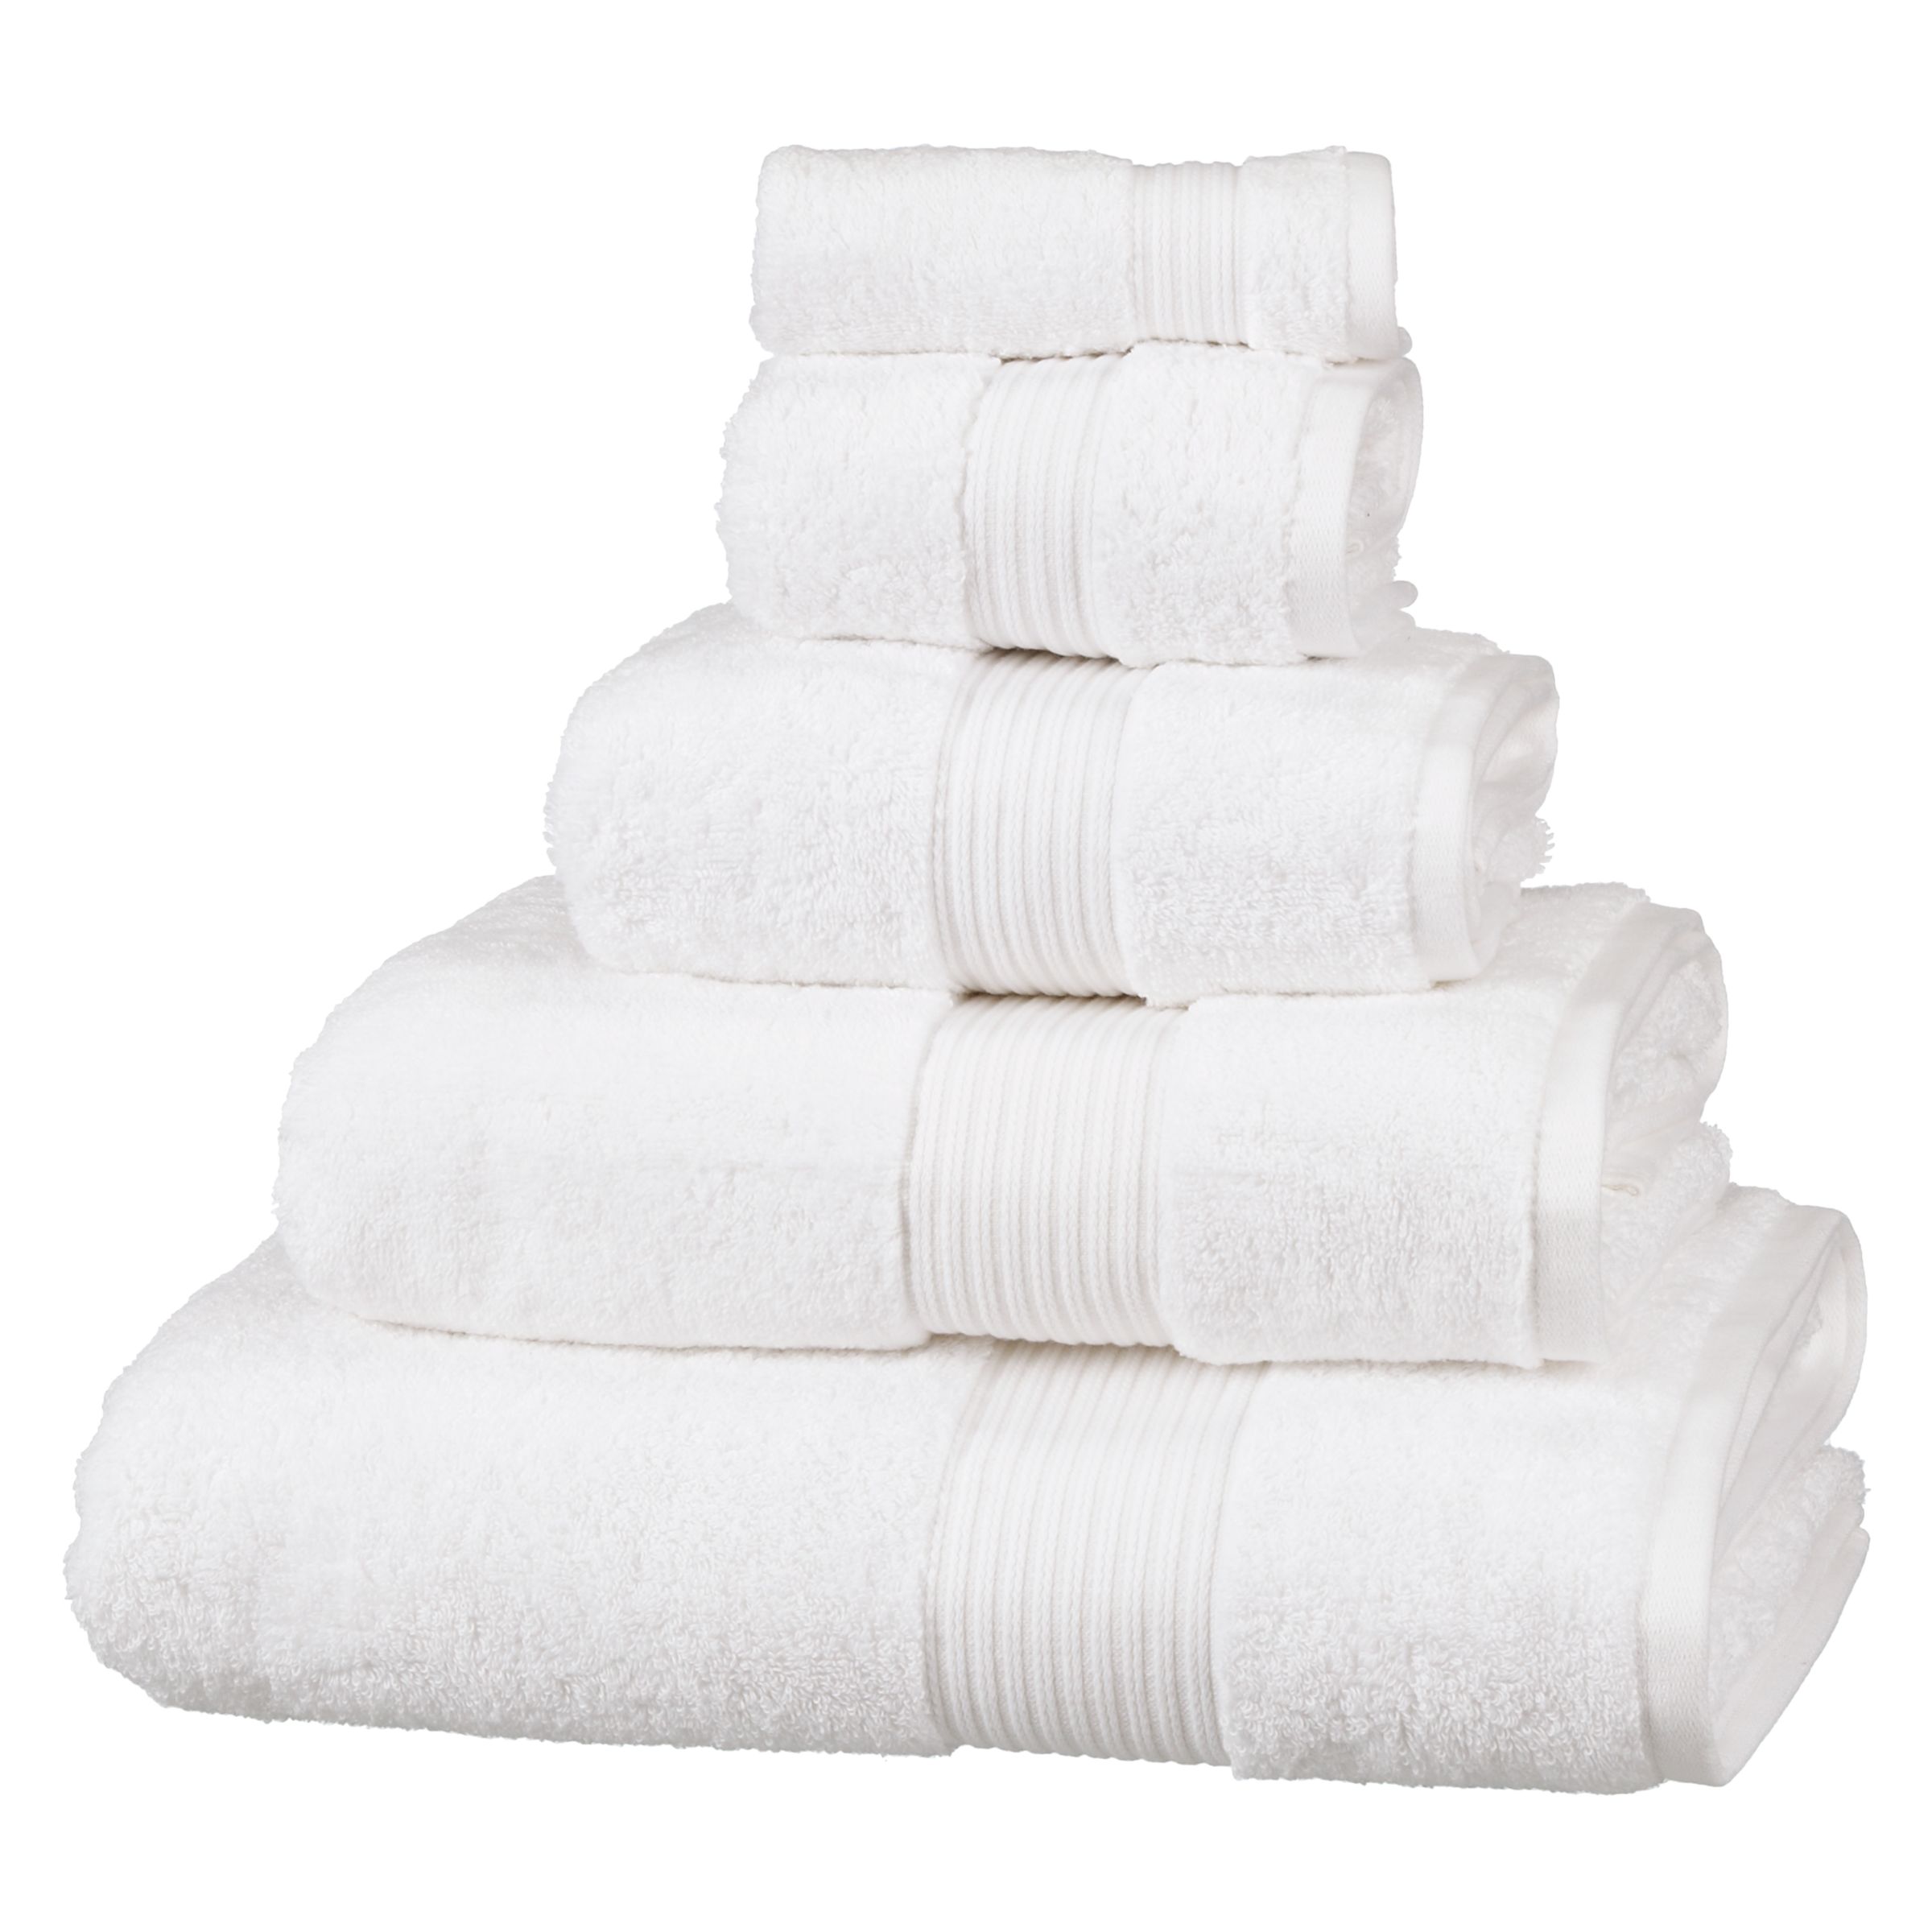 John Lewis Pure Cotton Towels, Kingfisher 109998